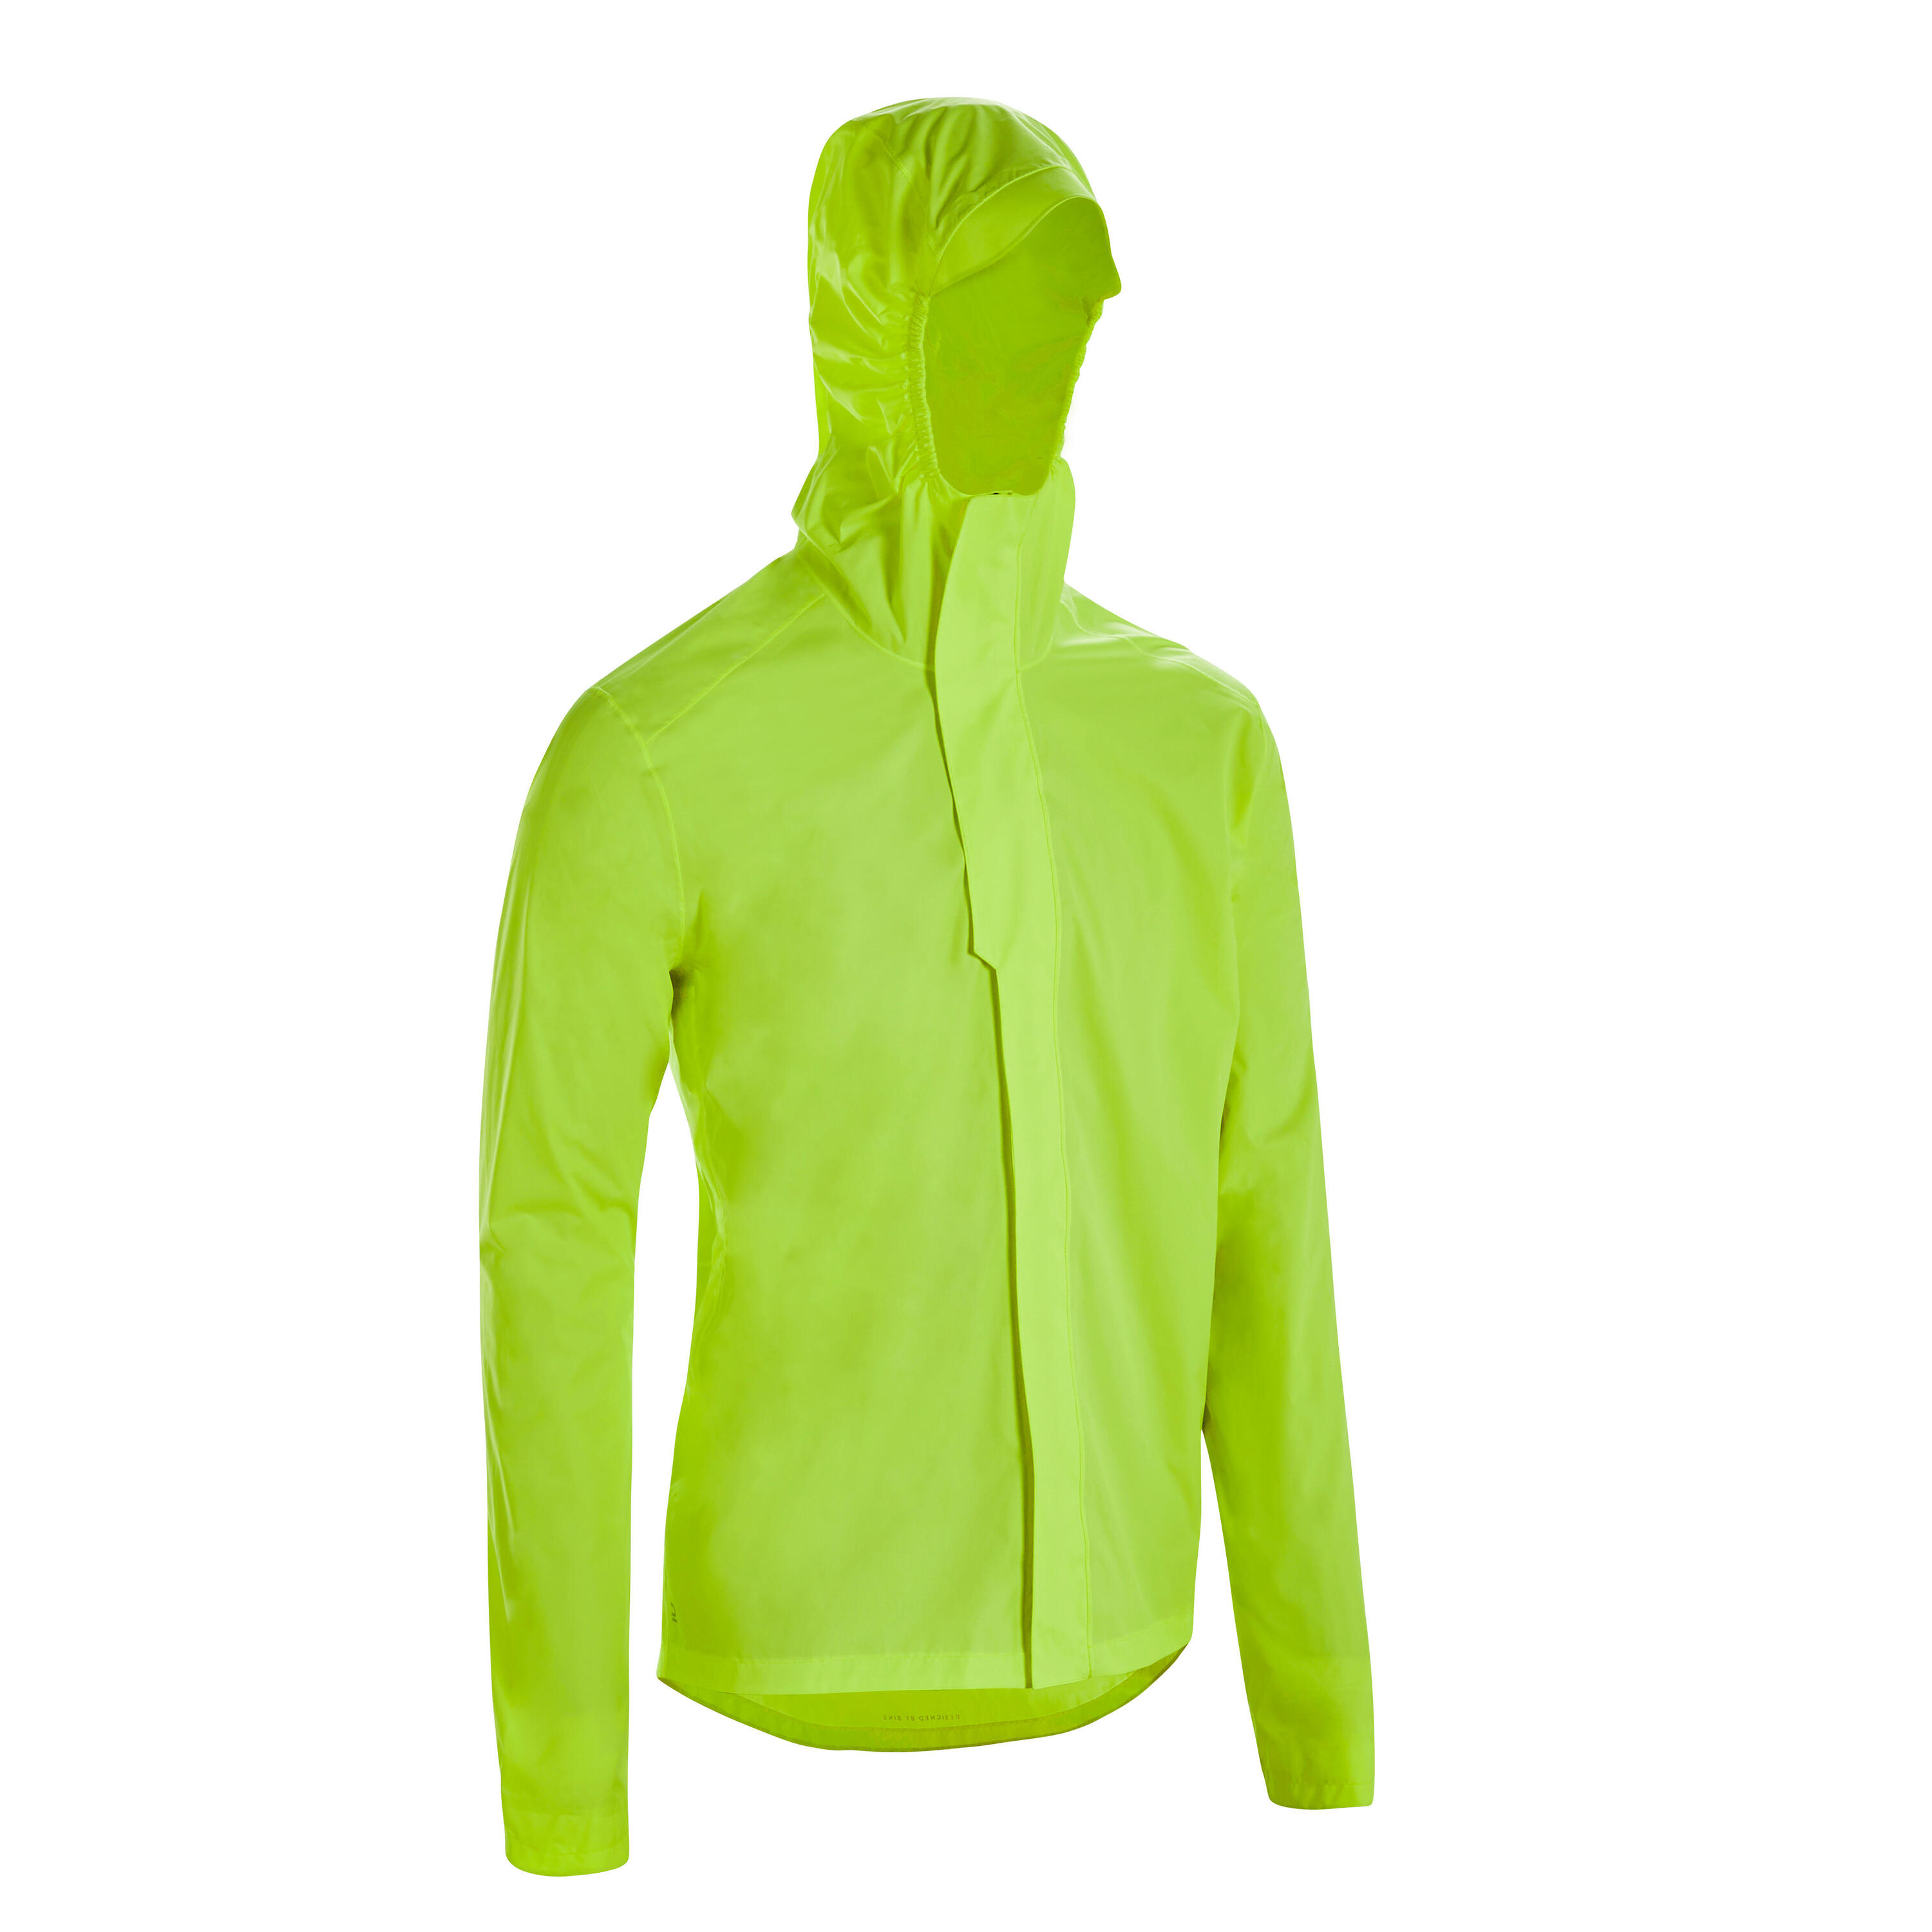 100 Men's Waterproof Urban Cycling Jacket - Neon Yellow 28/28